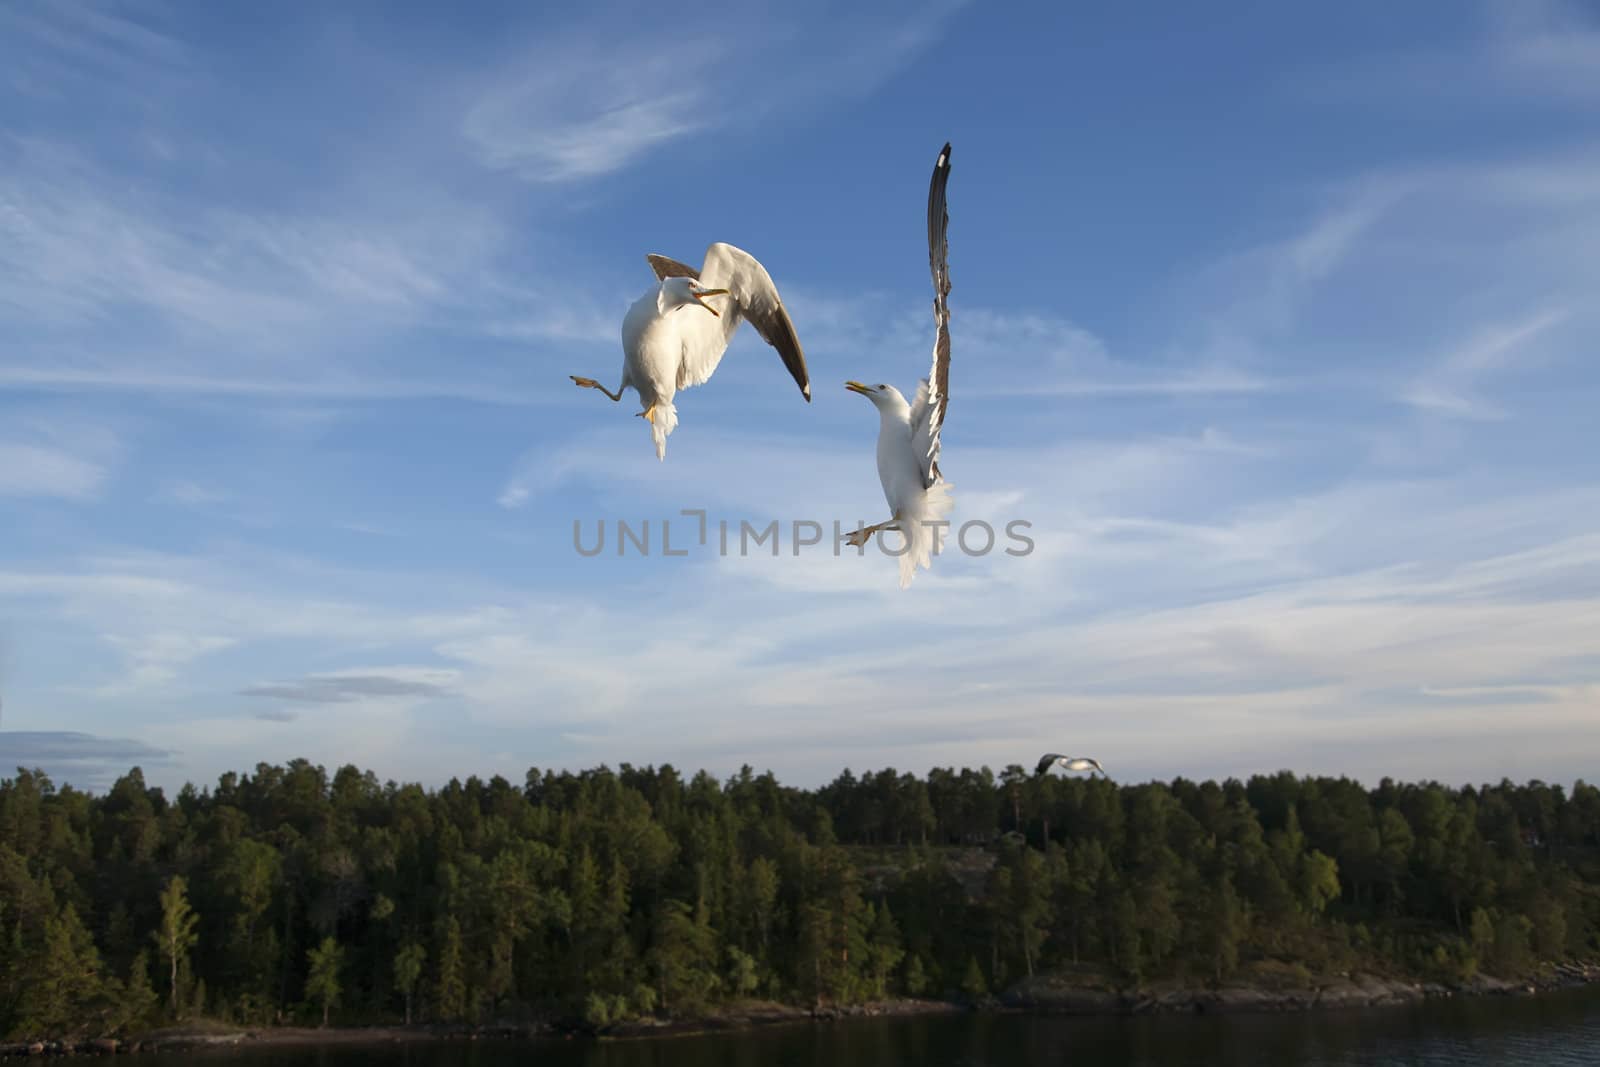 sea gull flying in the blue sky